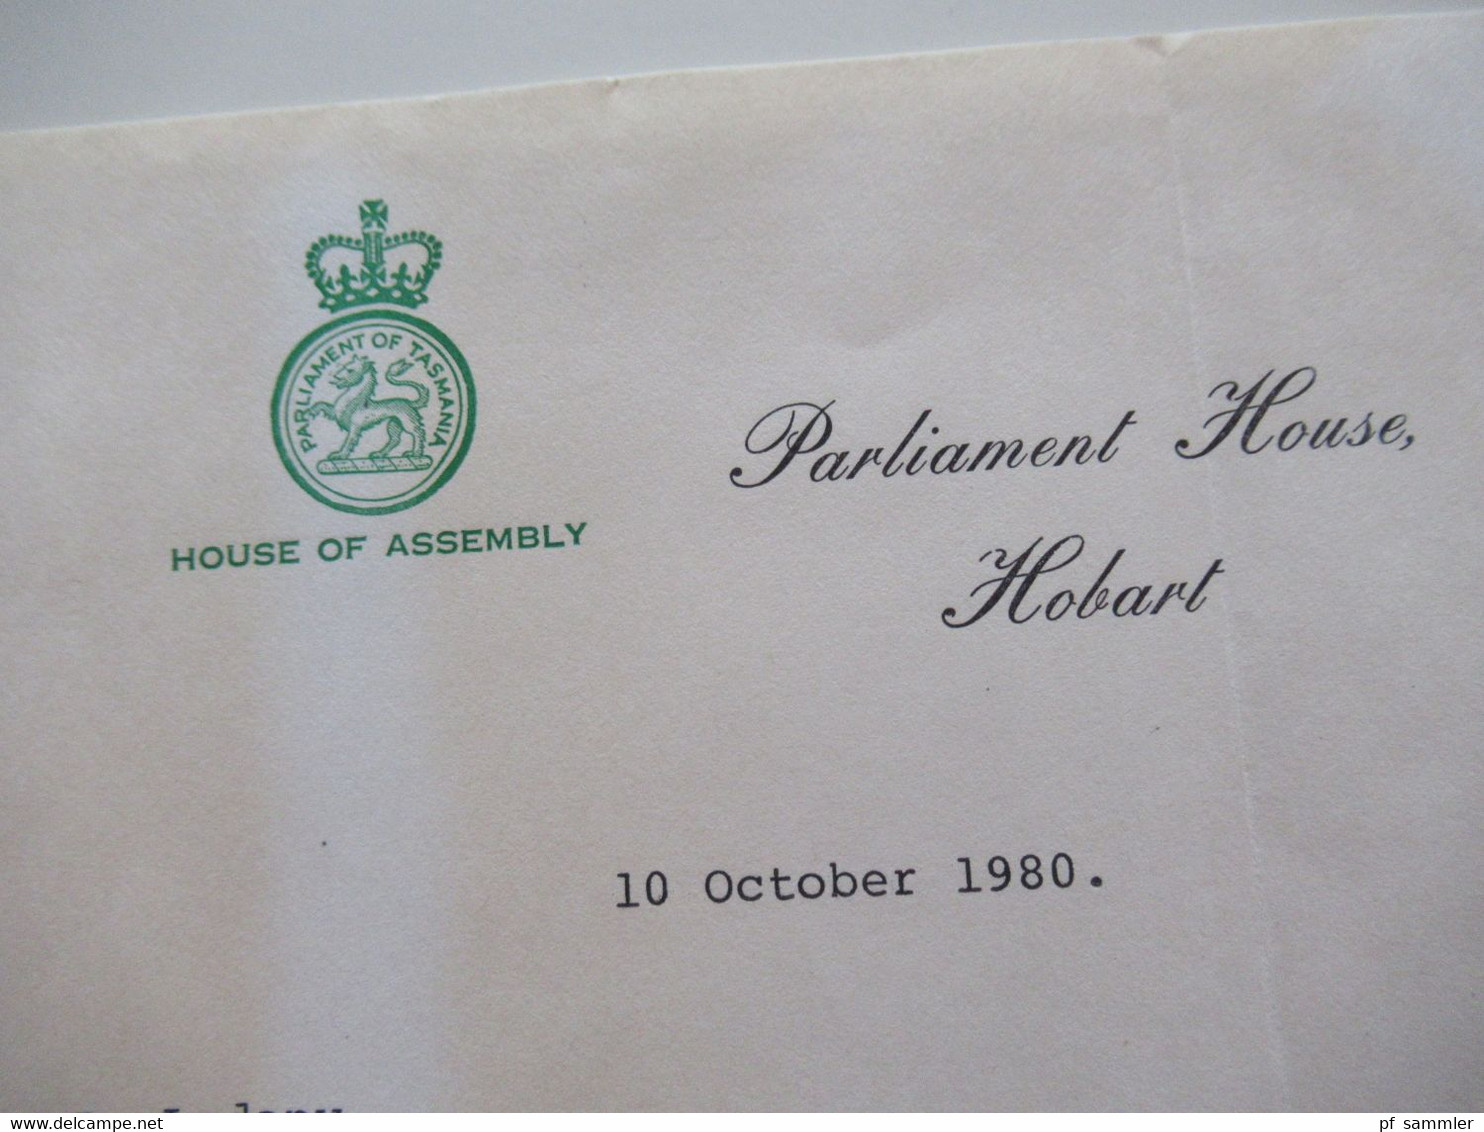 1980 Air Mail nach Atlanta Umschlag OHMS Printed Matter House of Assembly Papers Tasmania Inhalt Parliament House Hobart